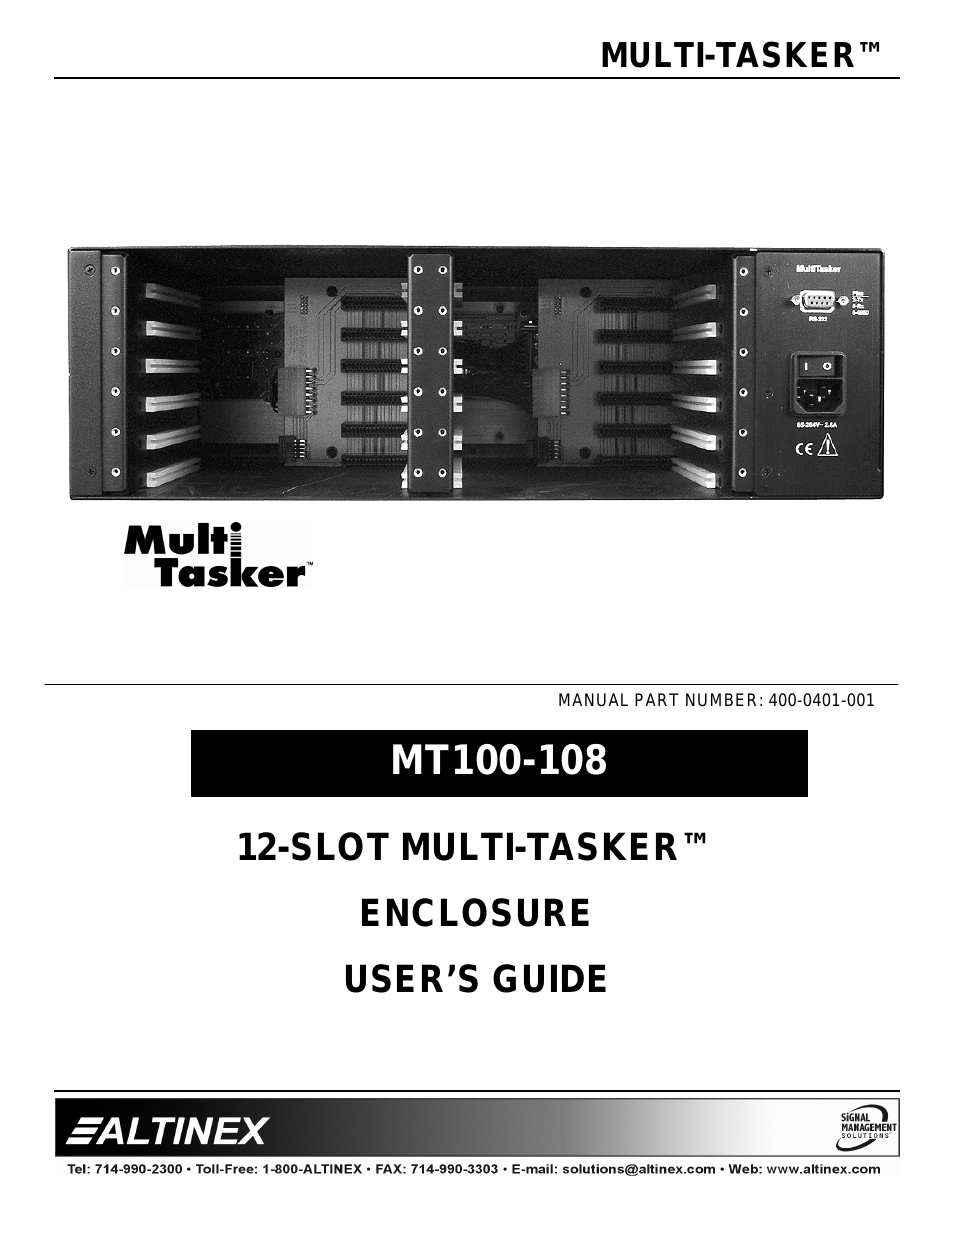 12-Slot Multi-Tasker Enclosure MT100-108